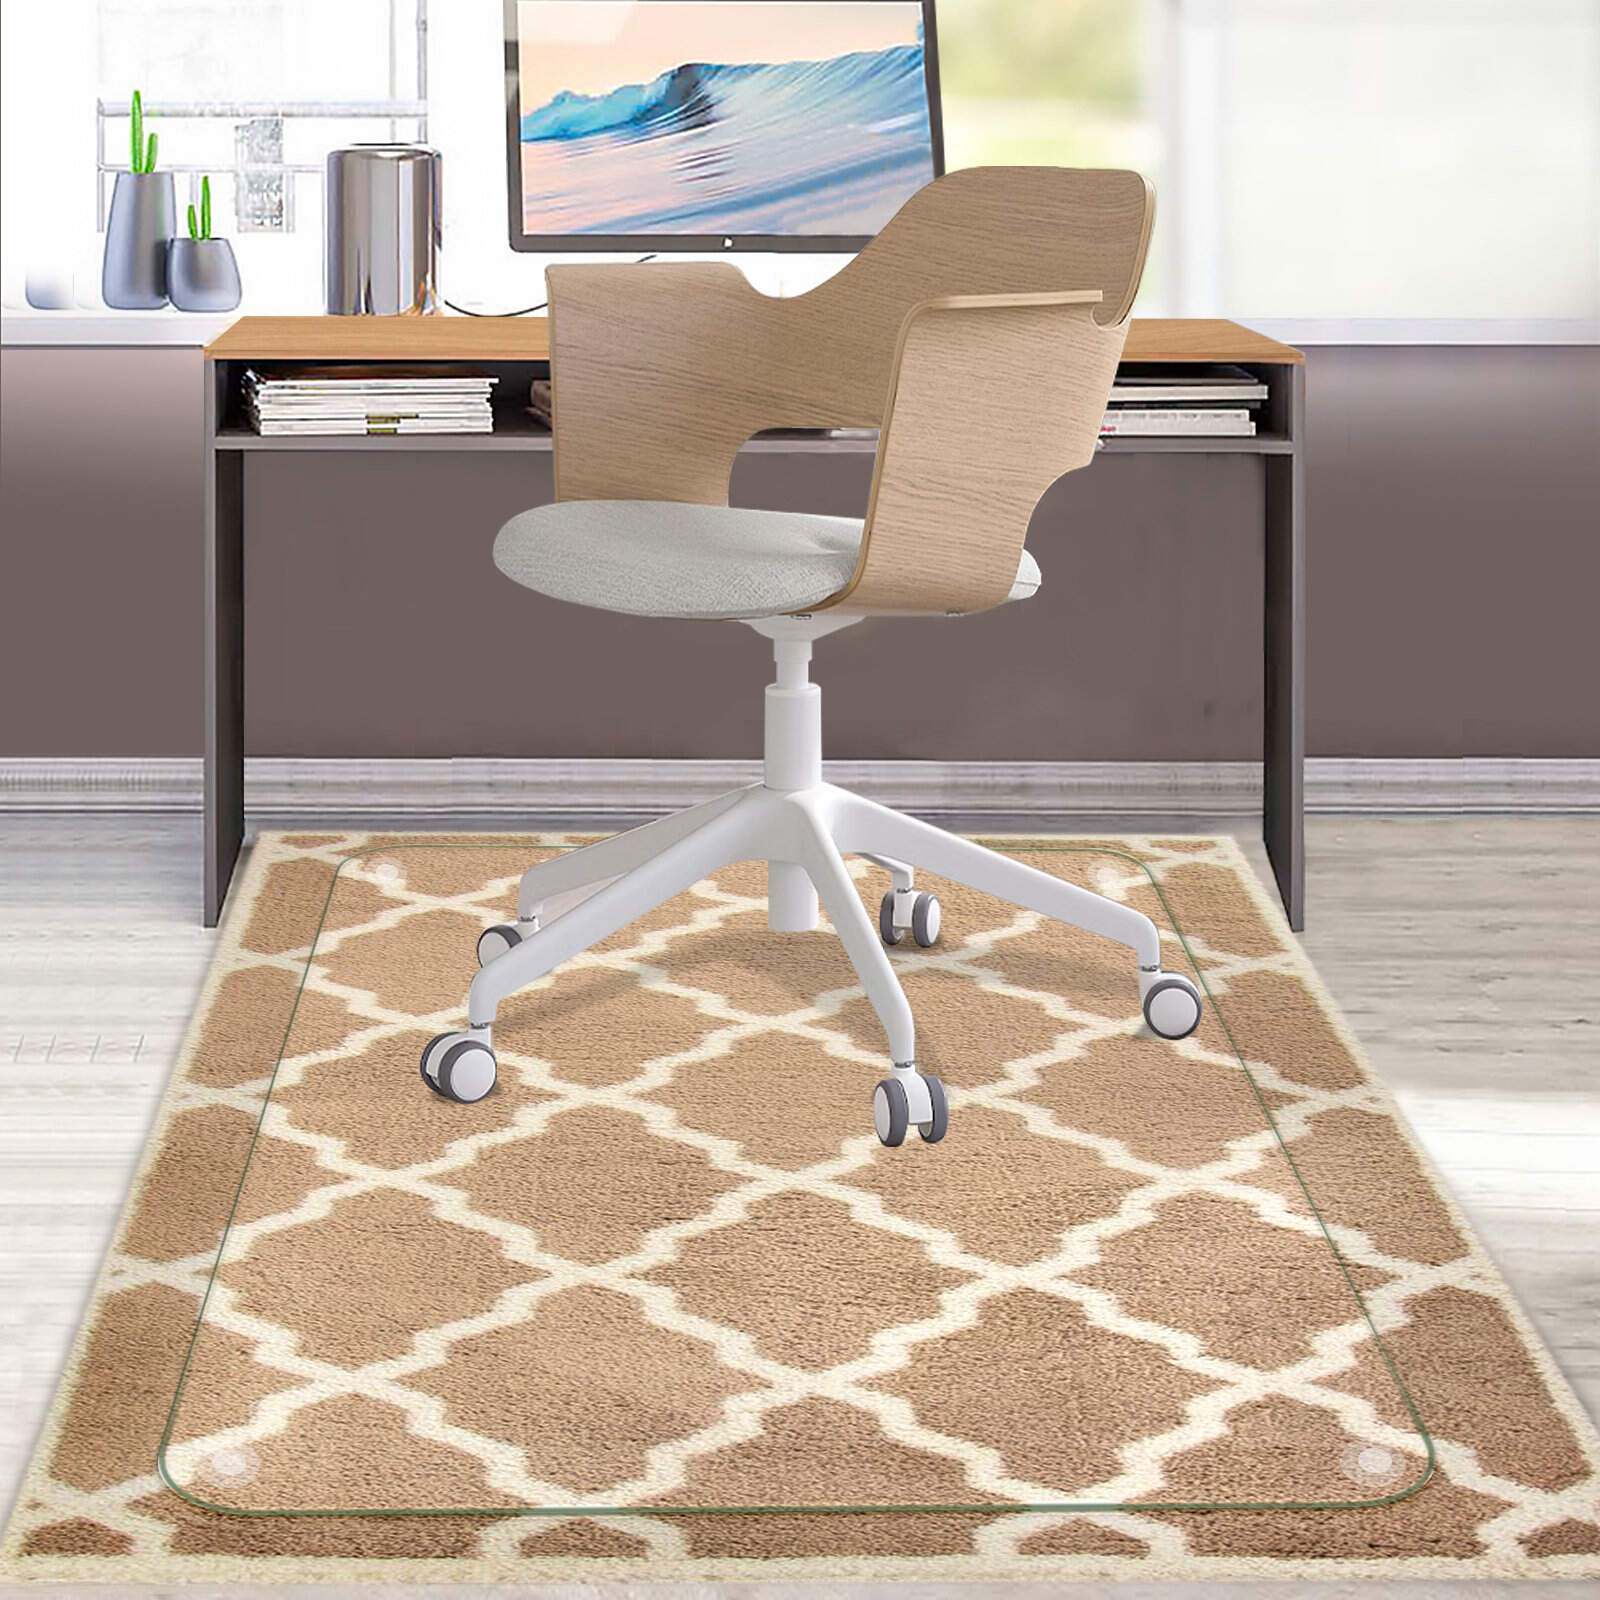 12 Superior Office Floor Mats For Carpet For 2023 1697126982 